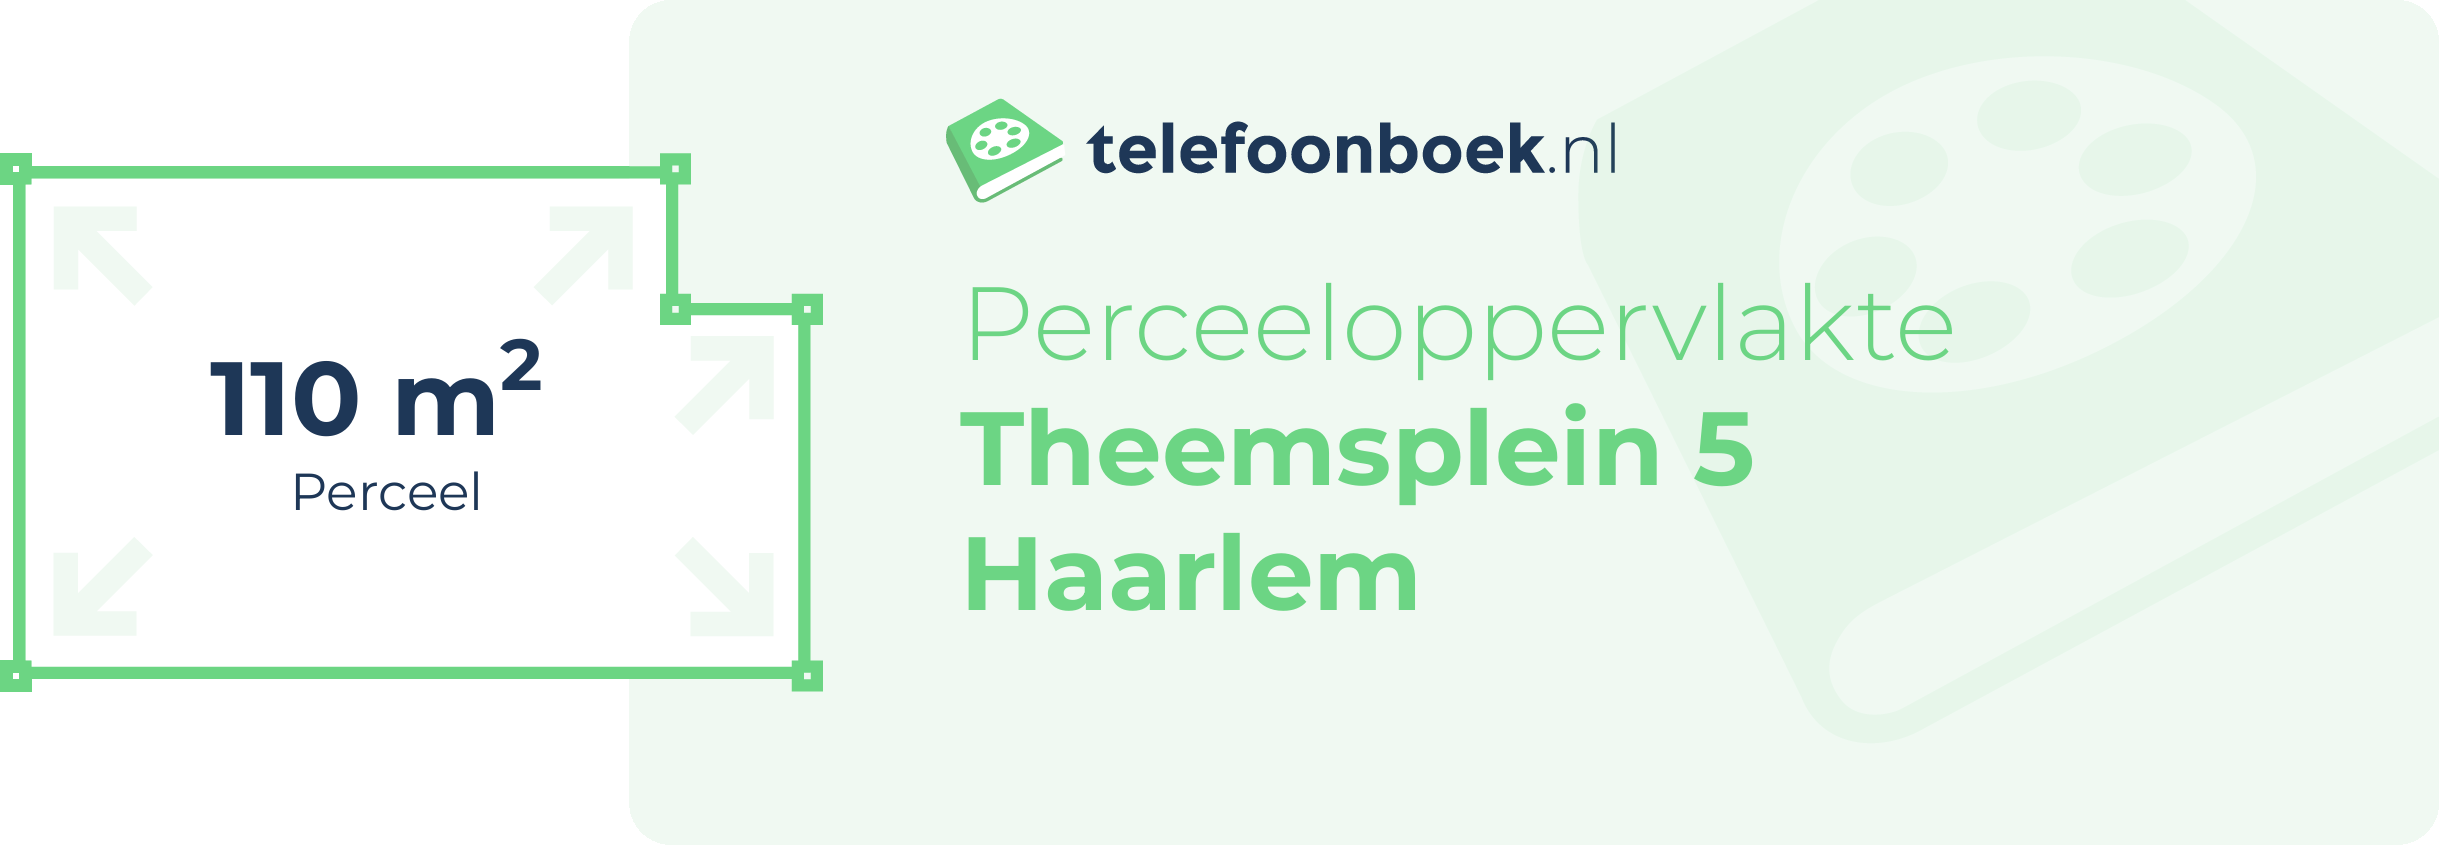 Perceeloppervlakte Theemsplein 5 Haarlem